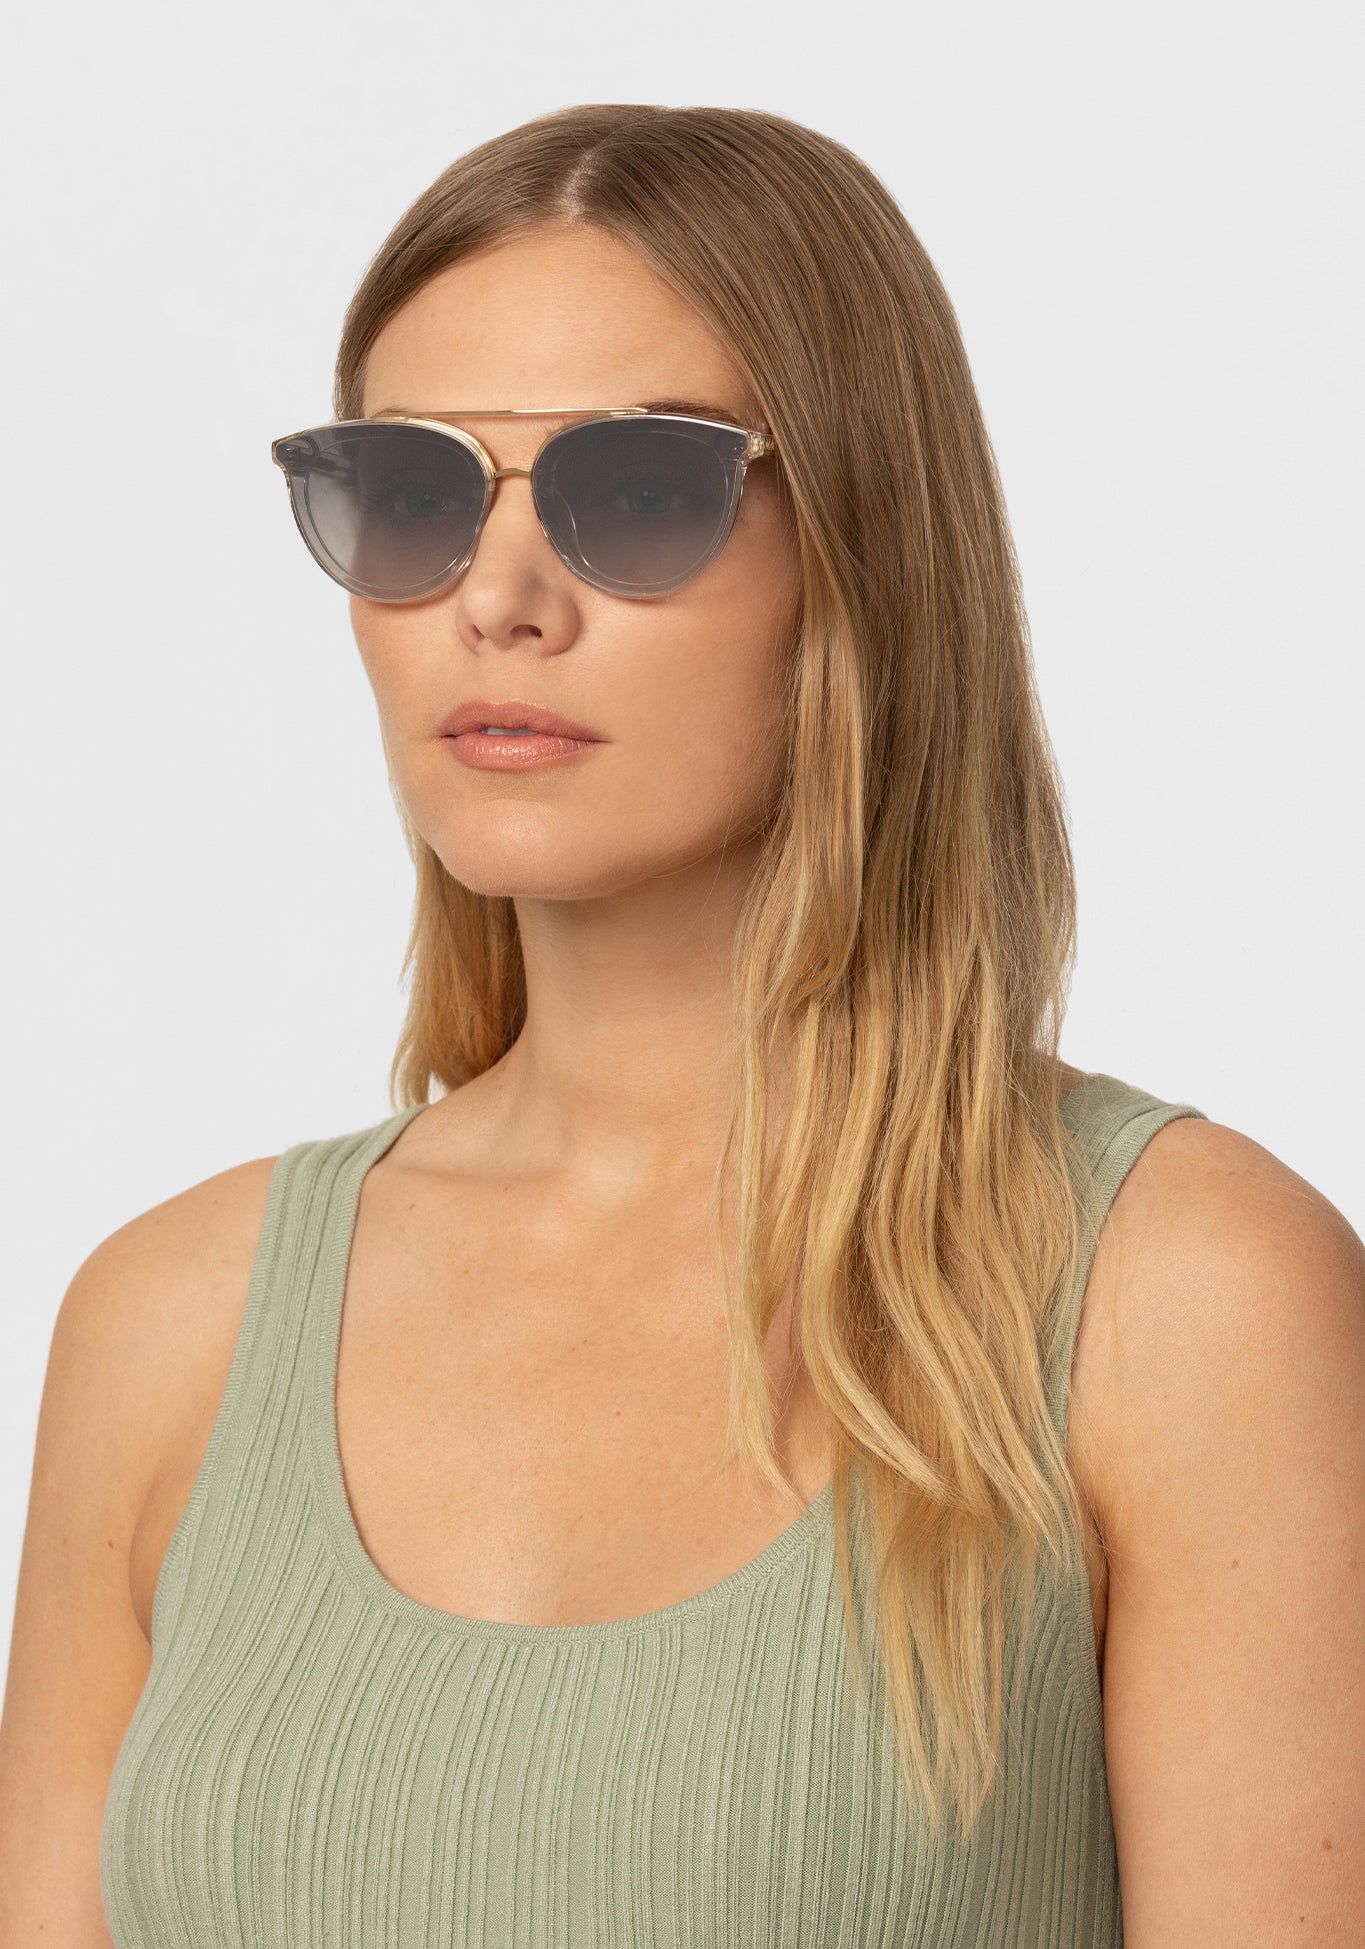 CLIO NYLON | Crystal 24K handcrafted, luxury clear acetate KREWE oversized sunglasses womens model | Model: Maritza